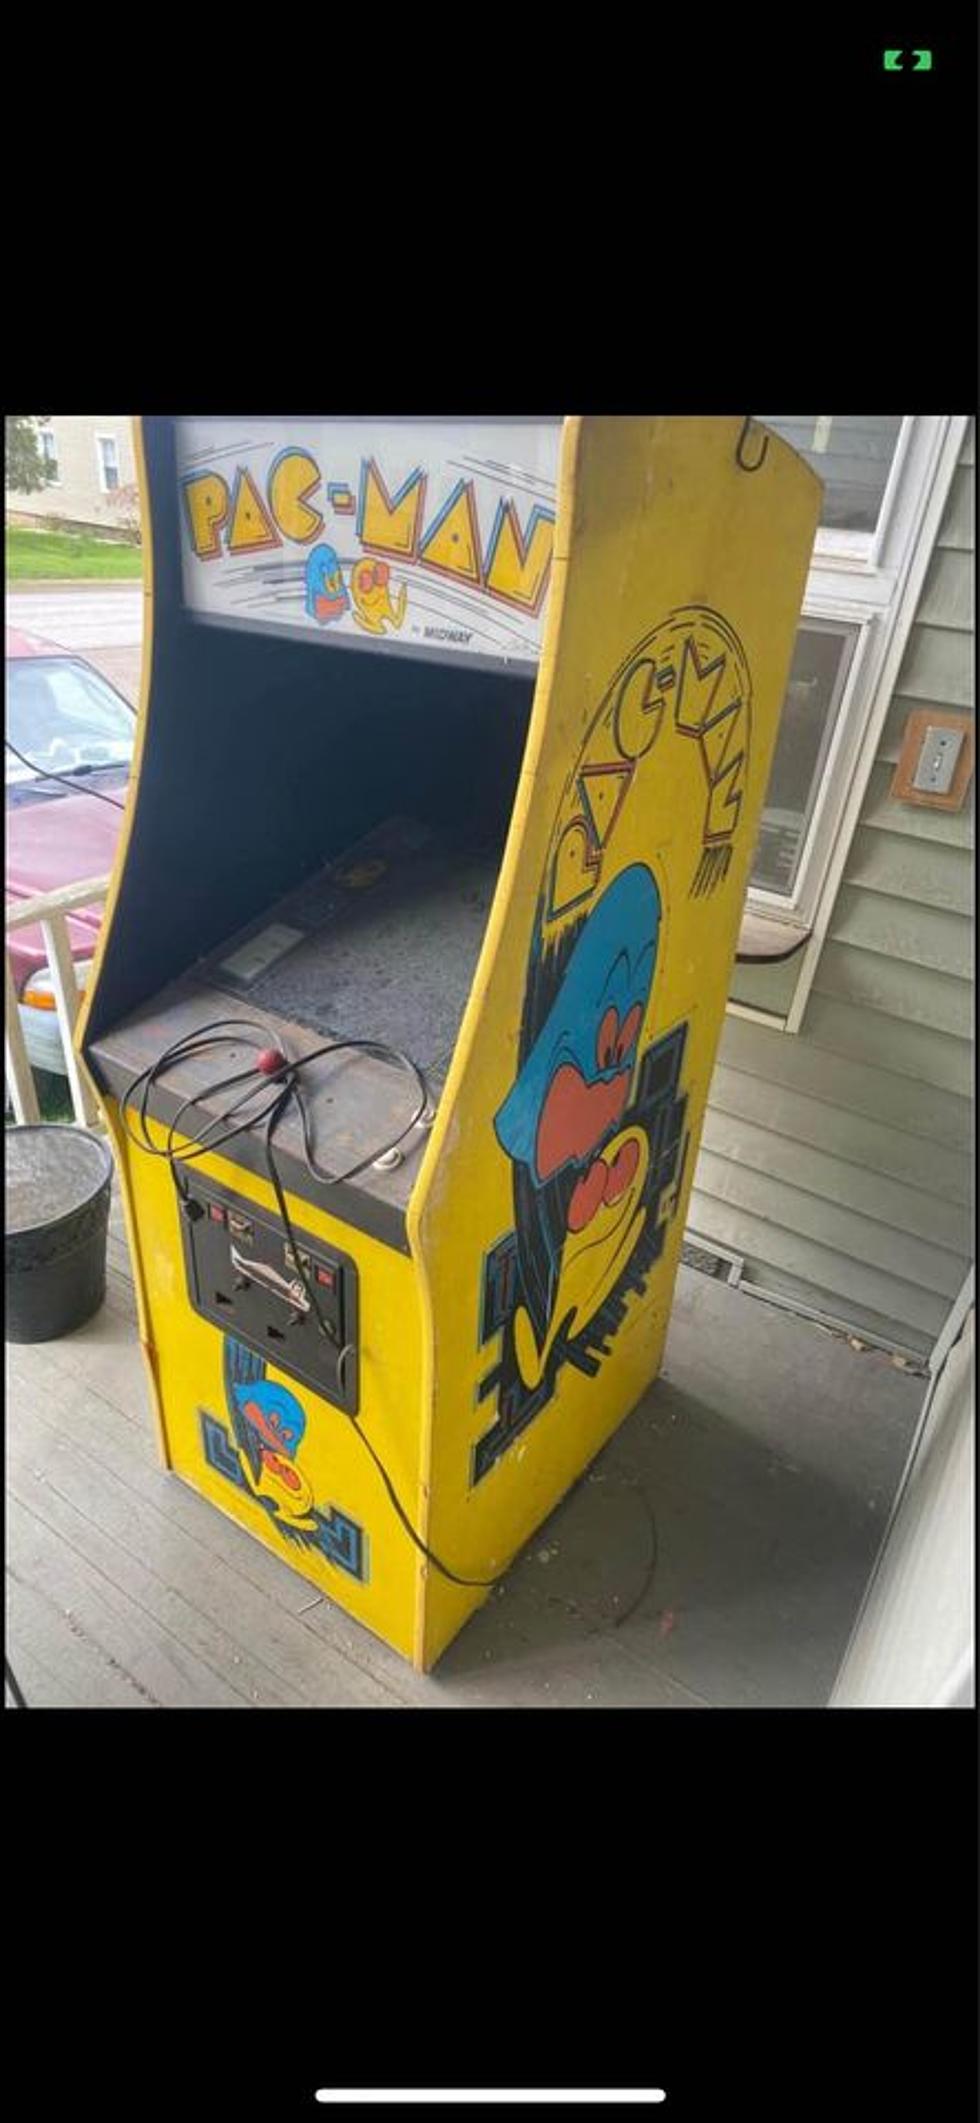 Got Pac Man Fever? You Can Own An Original Pac Man Arcade Game